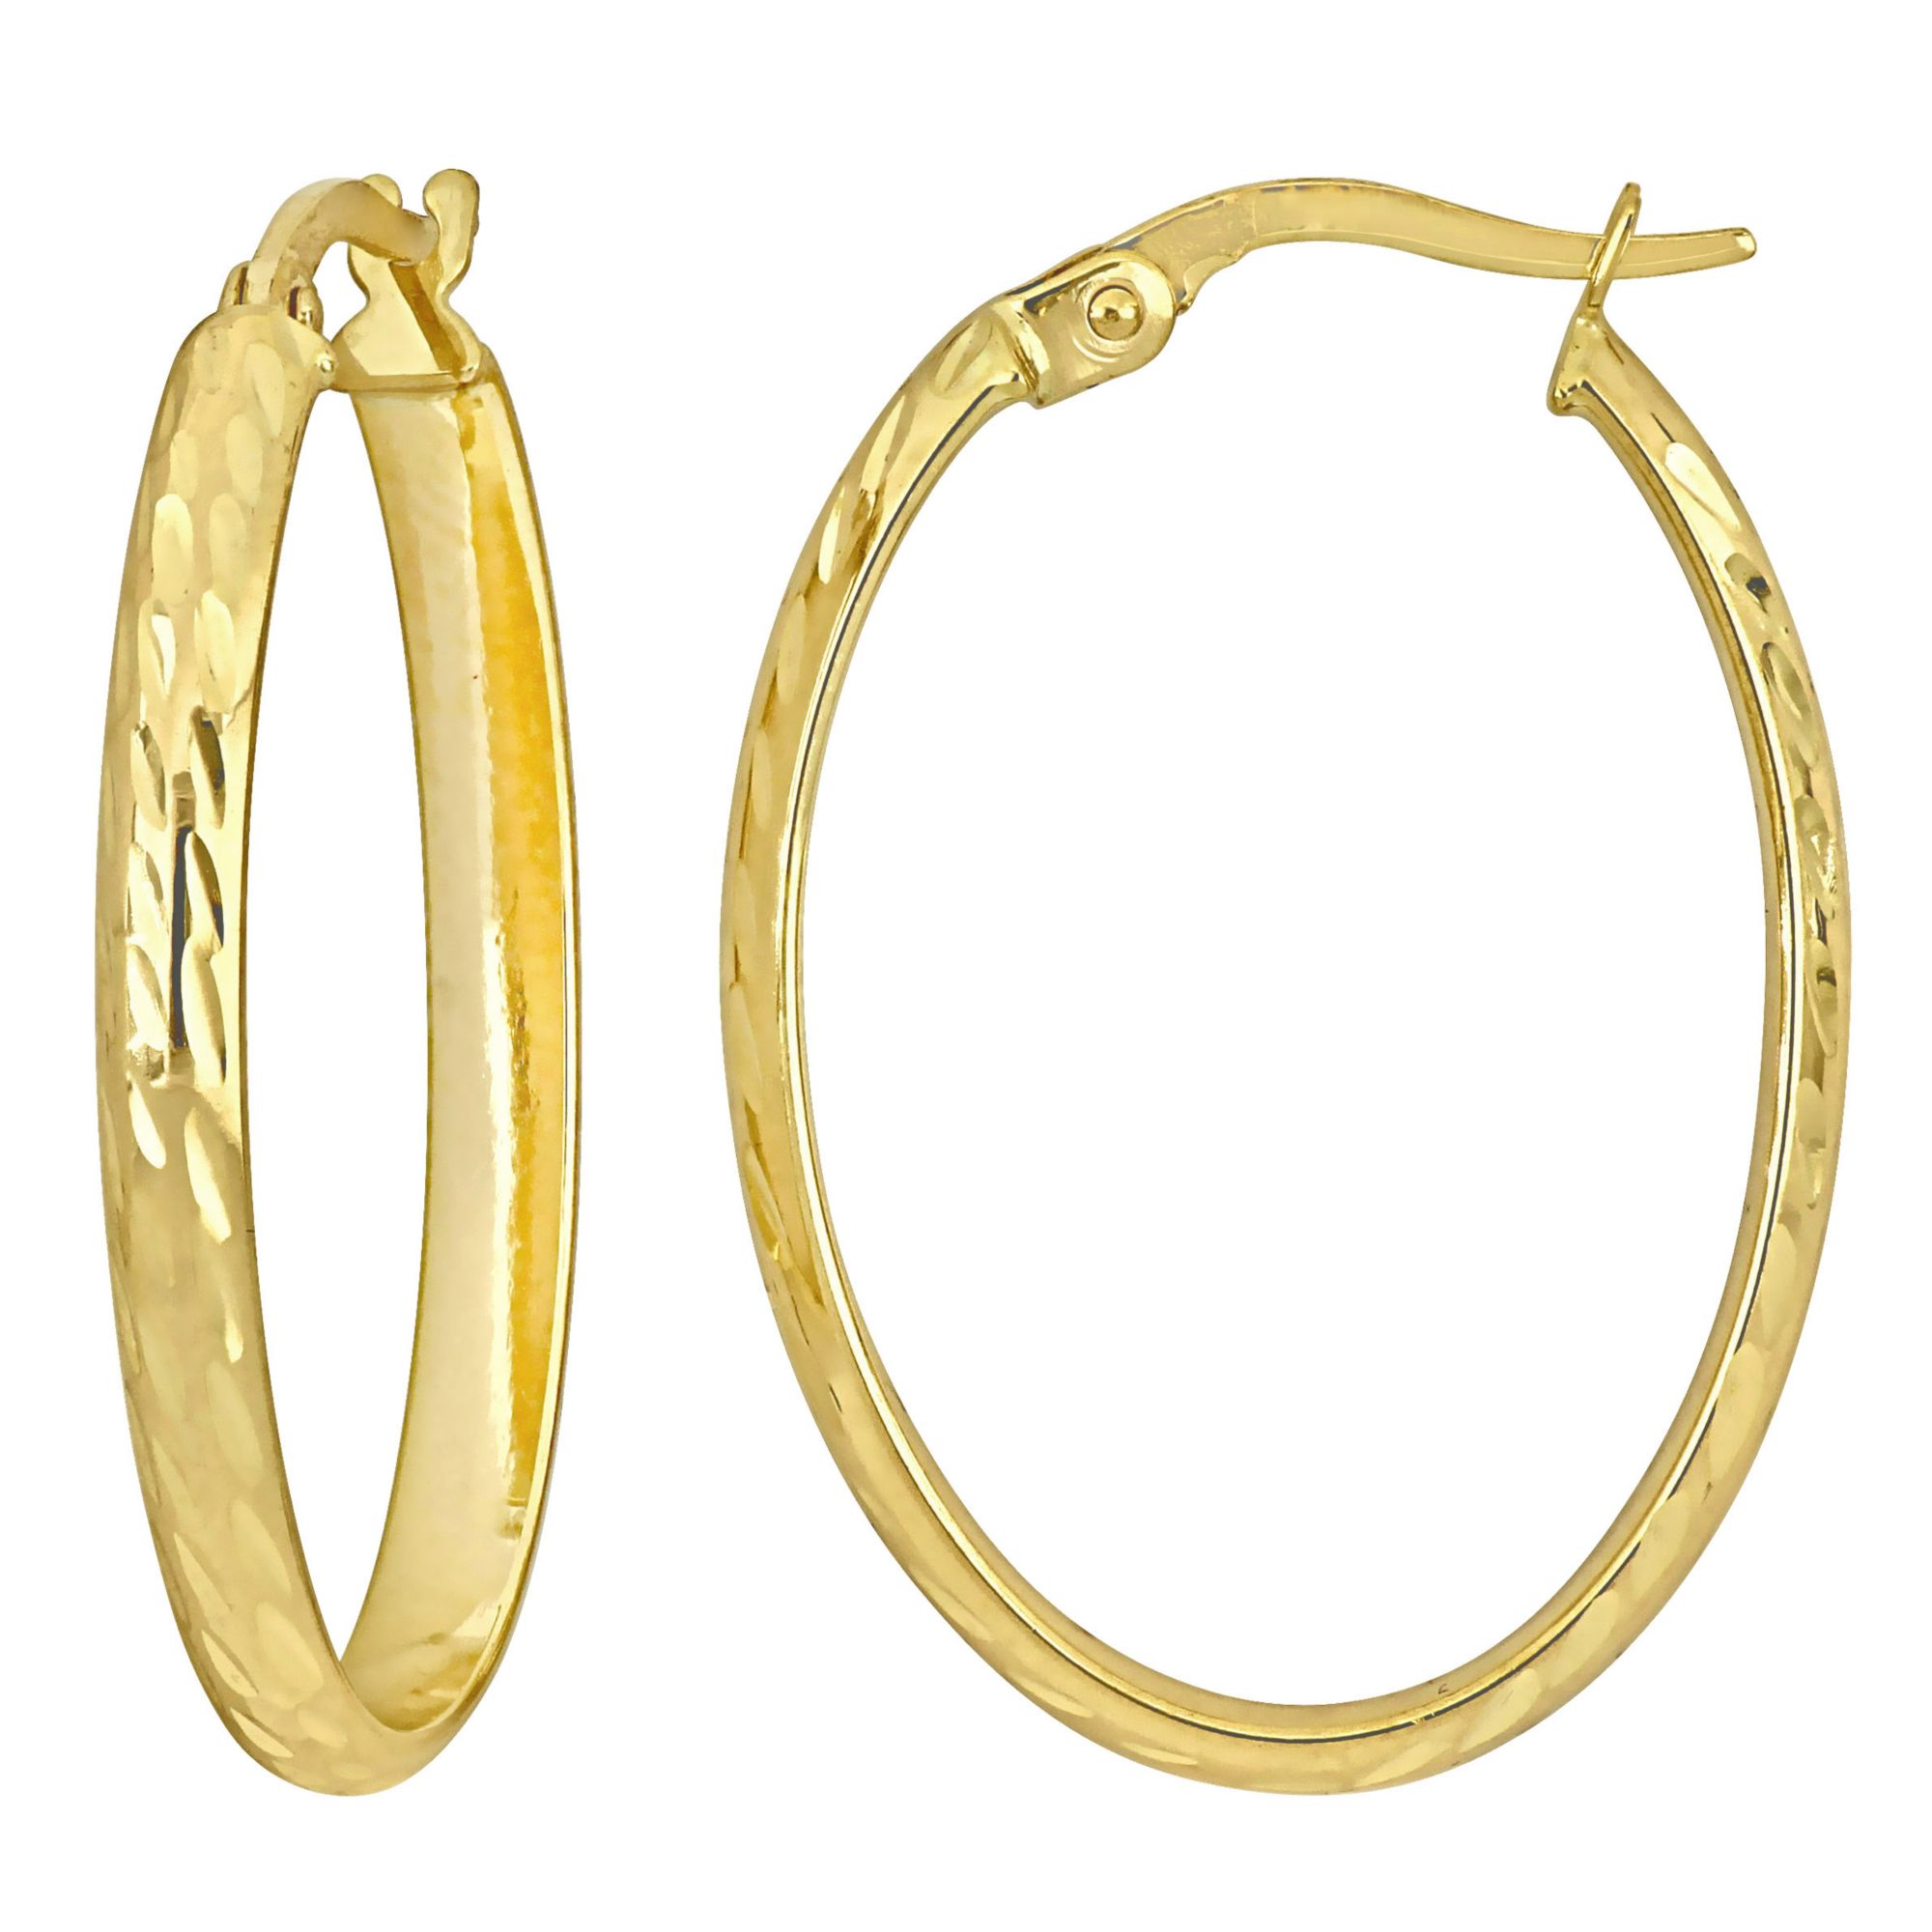 29mm Oval Textured Hoop Earrings in 10k Yellow Gold